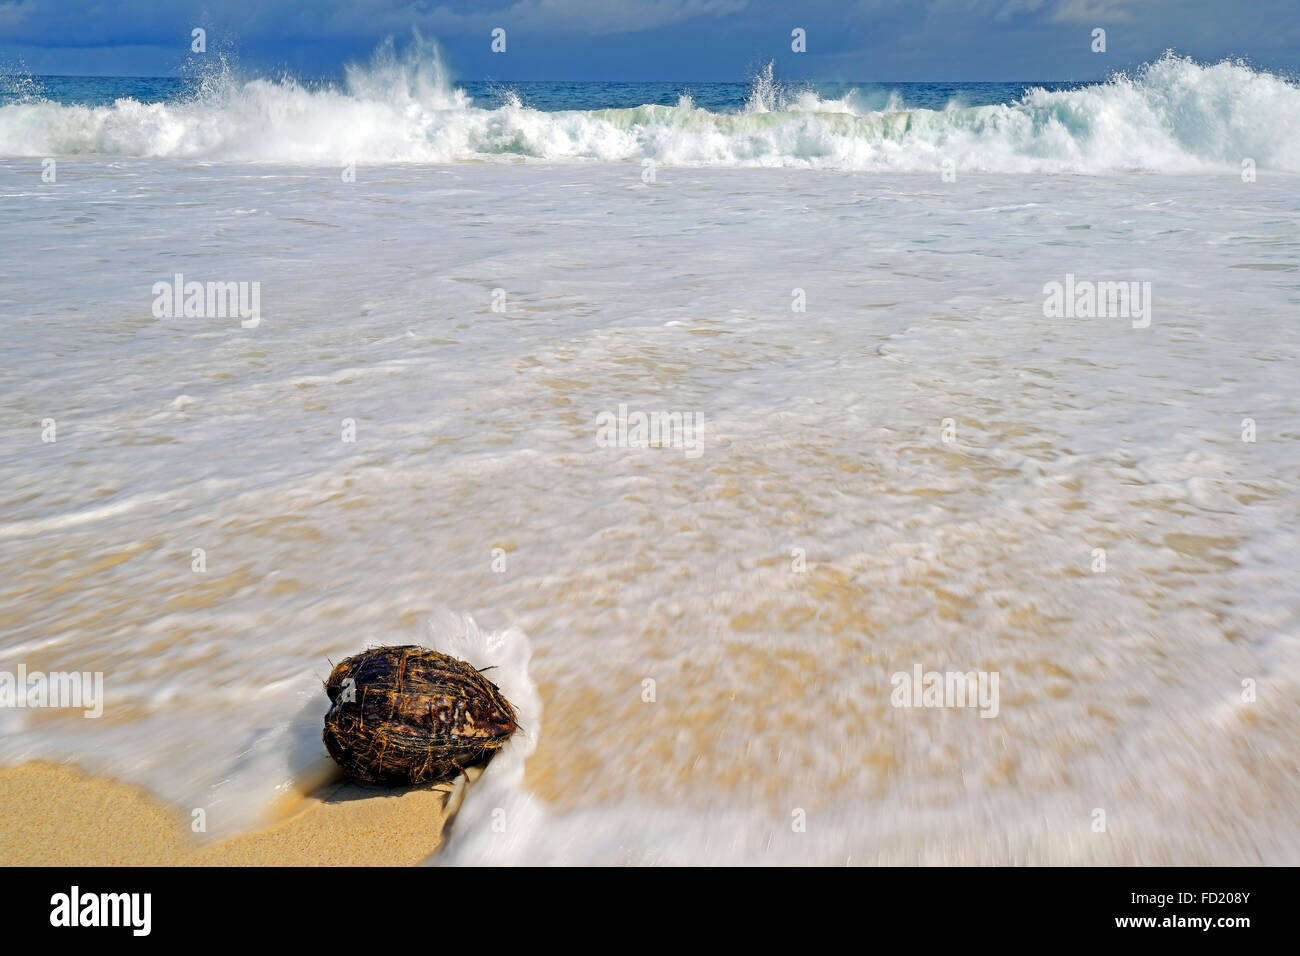 Coconut on beach in surf, Anse Intendance, Mahe Island, Seychelles Stock Photo